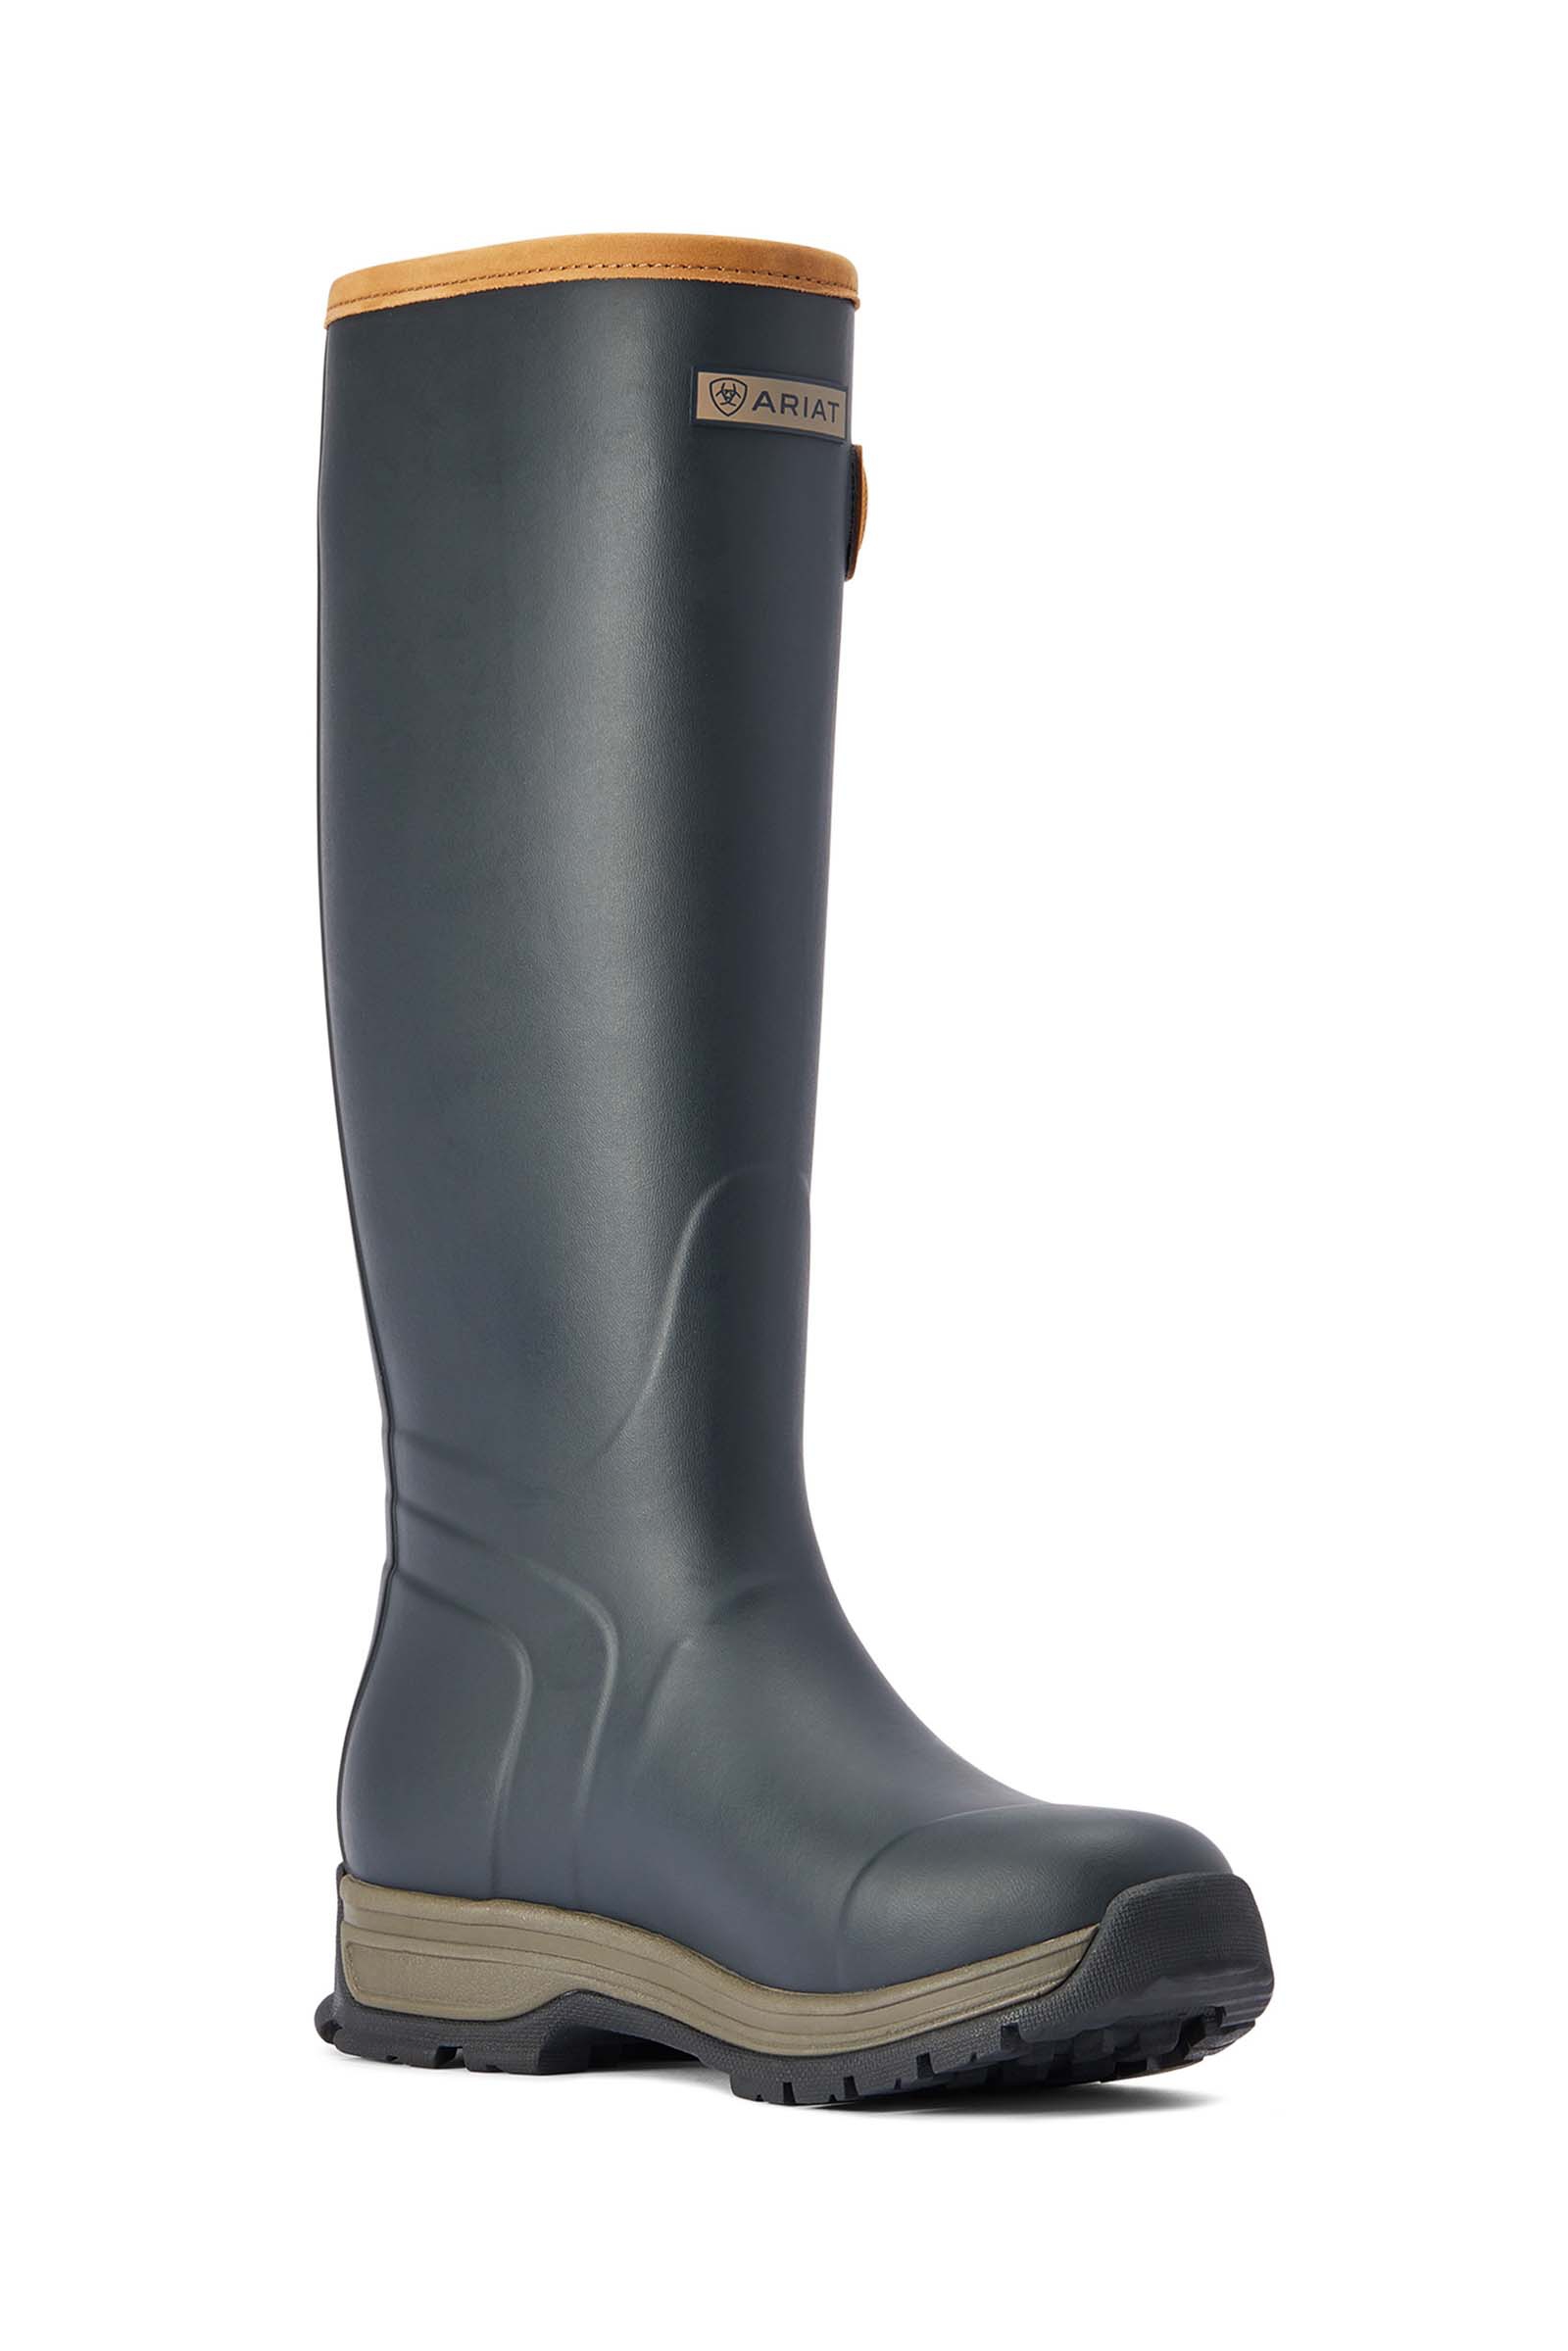 Buy Ariat Burford Women's Insulated Rubber Boots | horze.com